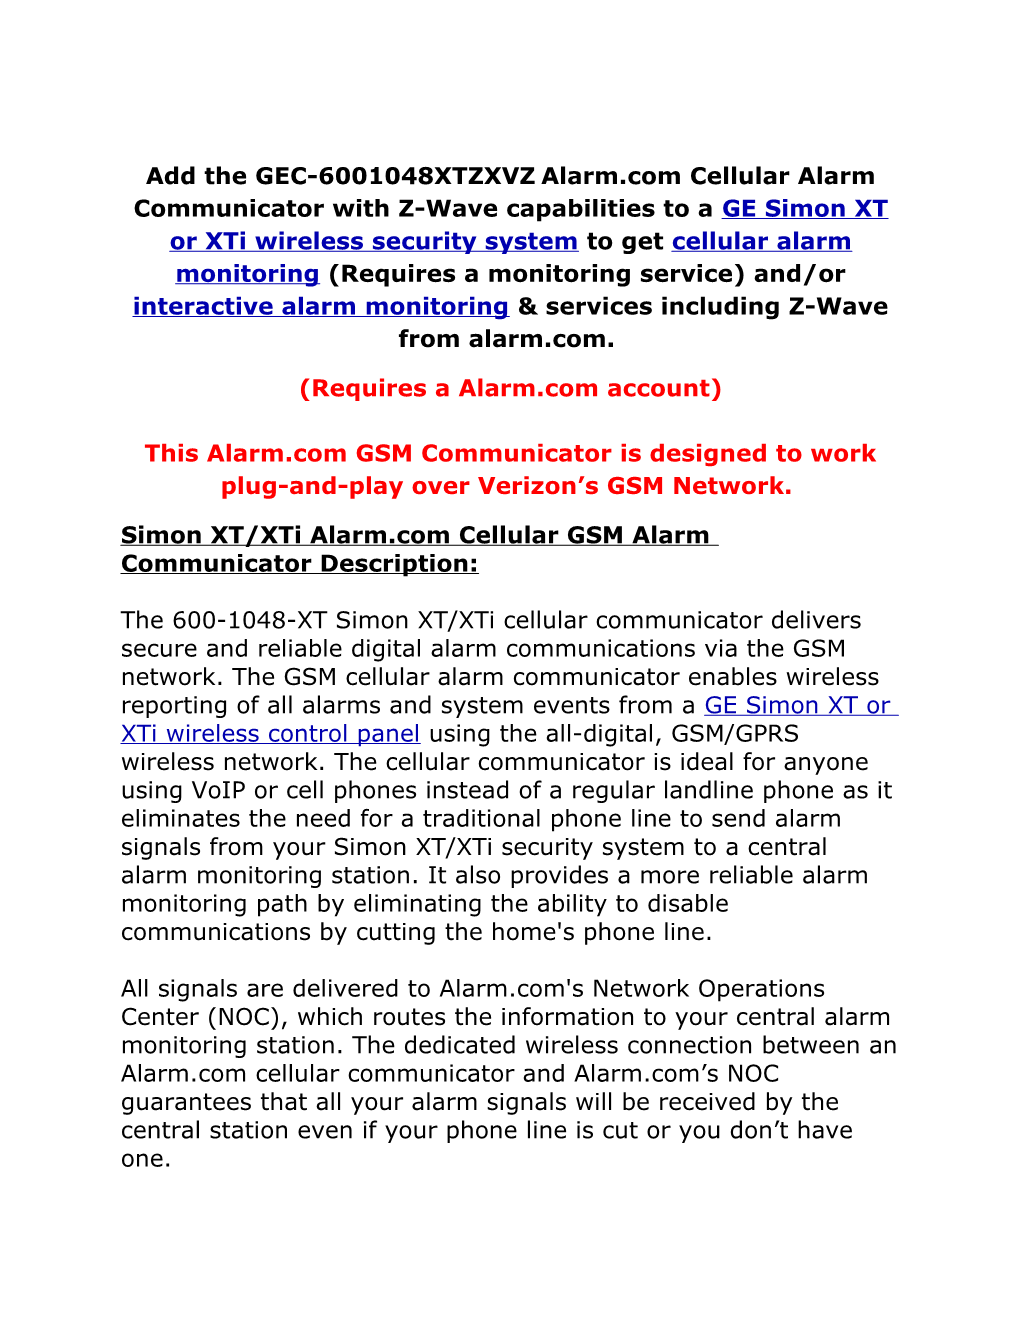 Simon XT/Xti Alarm.Com Cellular GSM Alarm Communicator Description